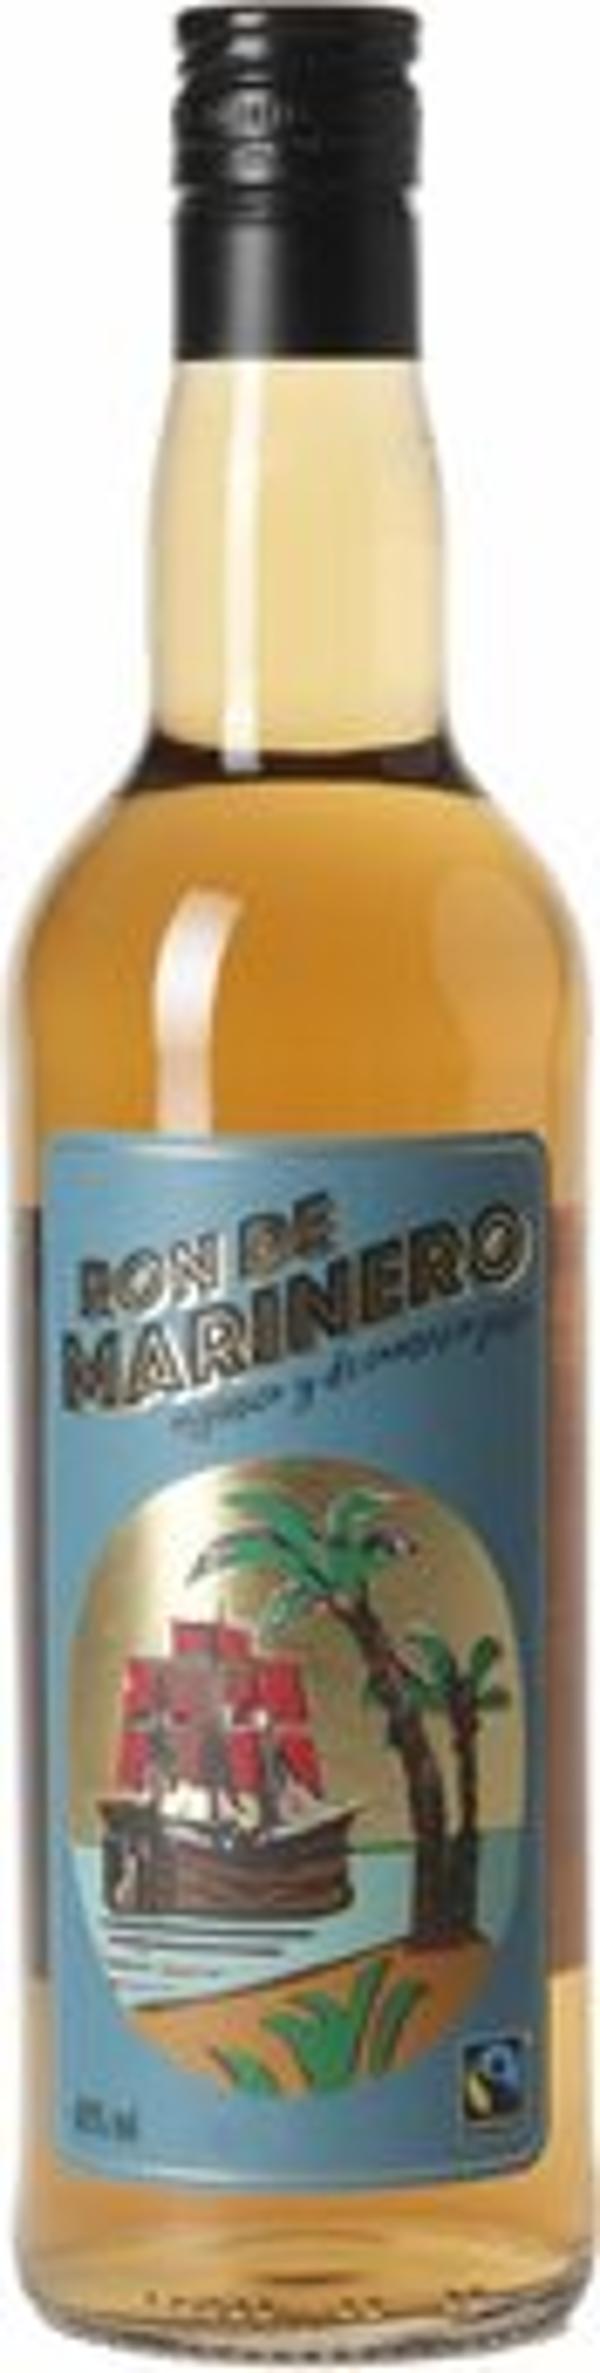 Produktfoto zu Rum de Marinero fair trade braun